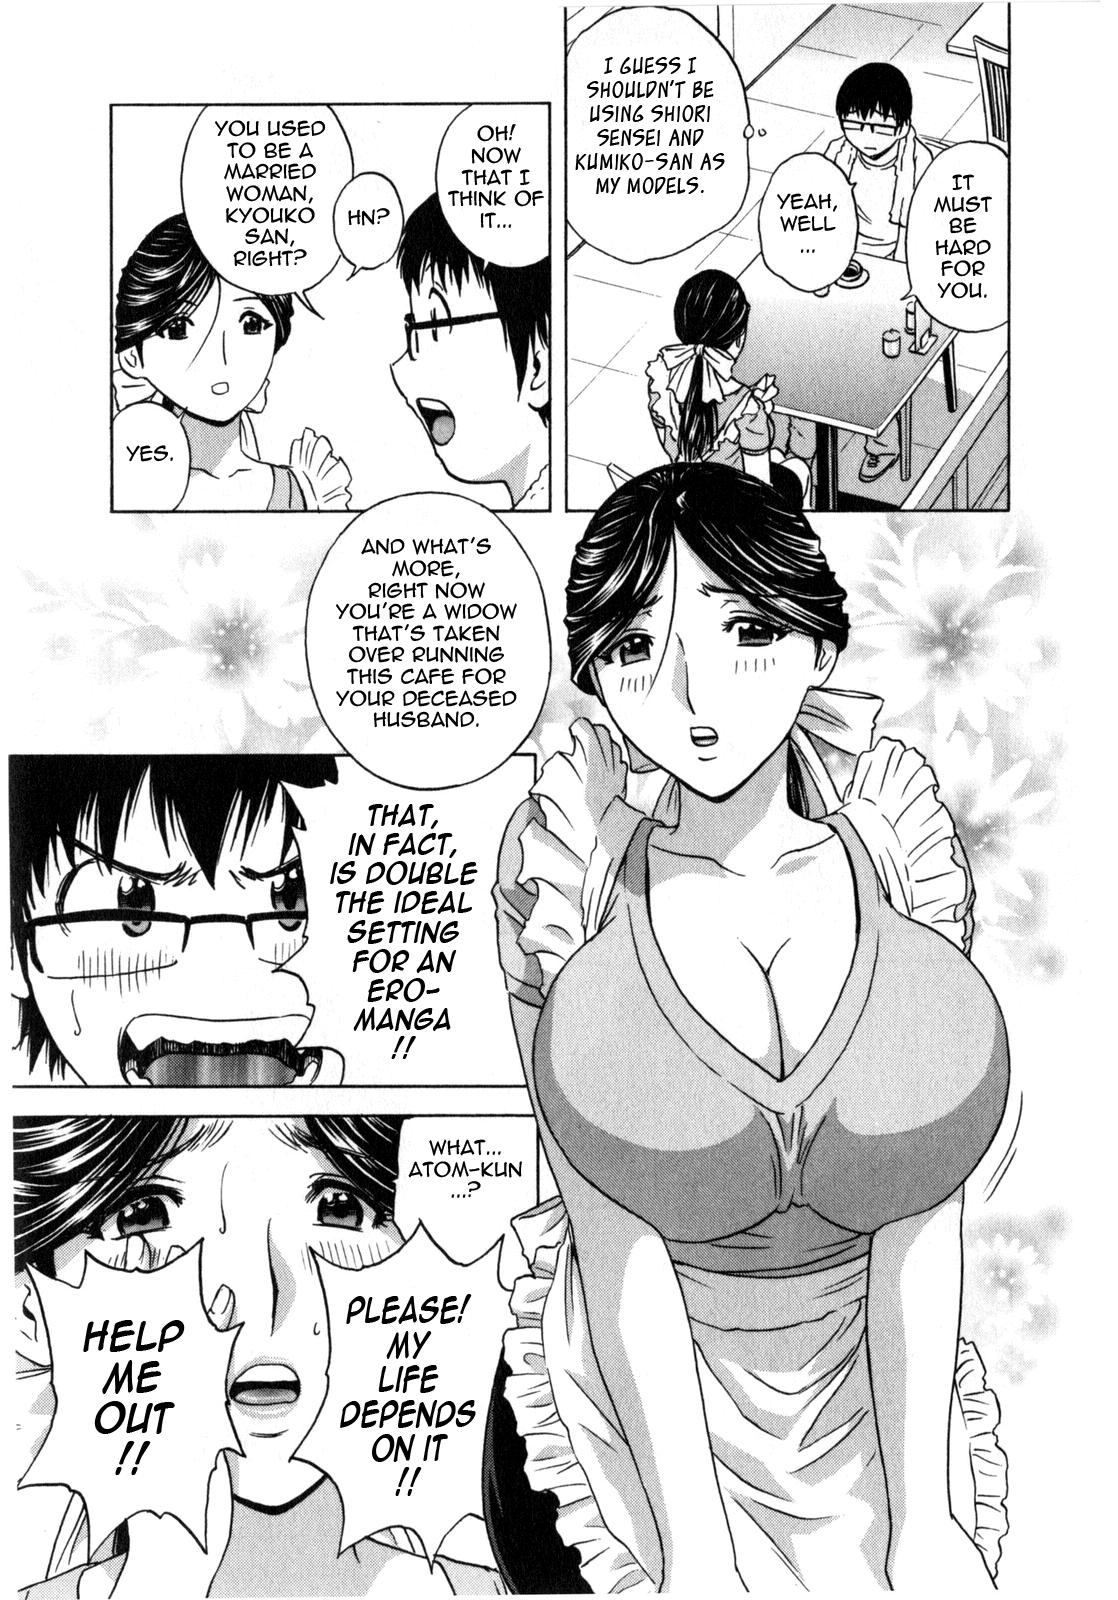 [Hidemaru] Life with Married Women Just Like a Manga 1 - Ch. 1-8 [English] {Tadanohito} 72